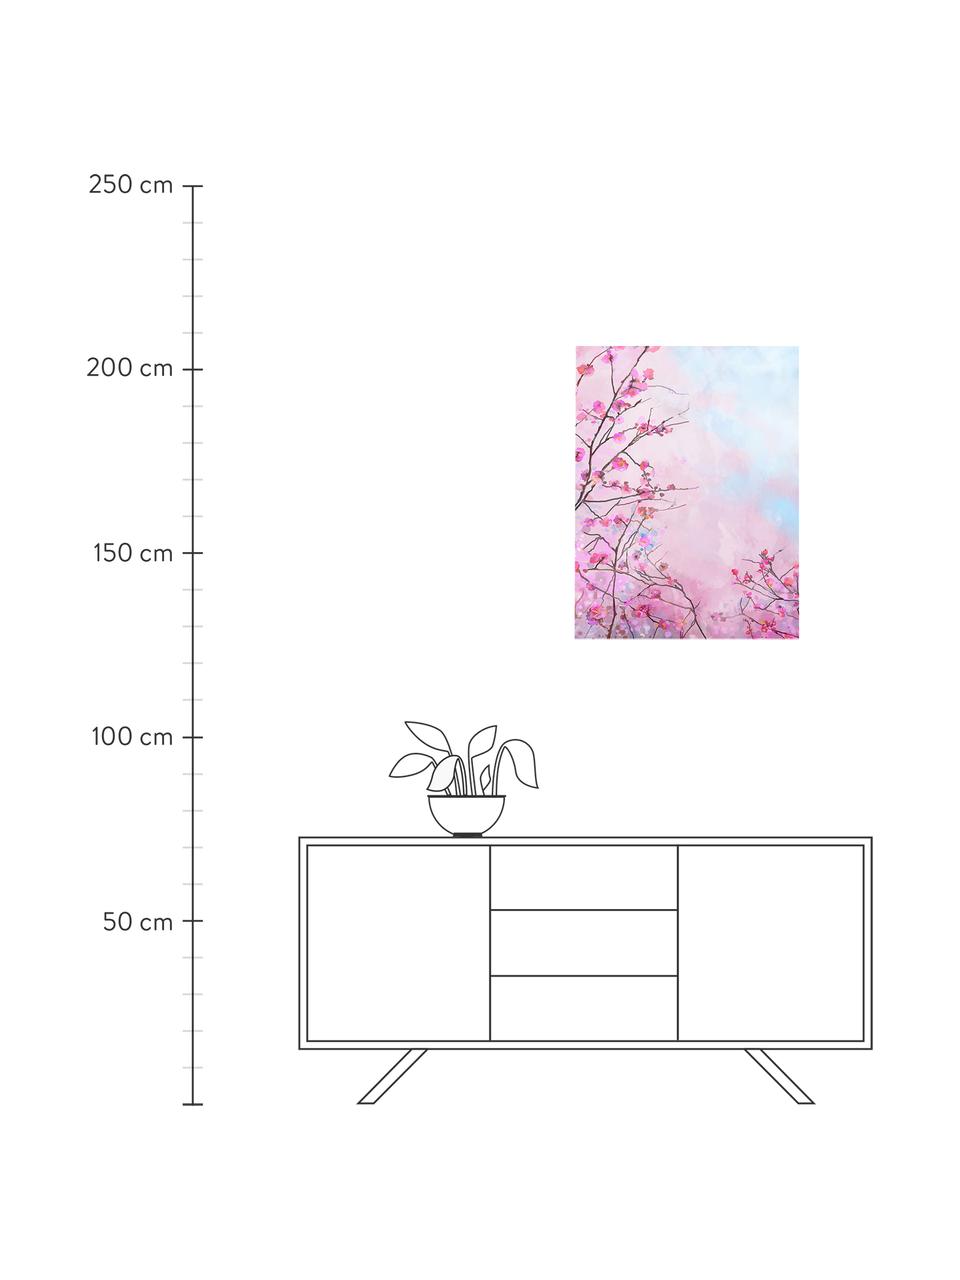 Stampa su tela Sakura Floral, Immagine: stampa digitale su lino, Multicolore, Larg. 63 x Alt. 83 cm